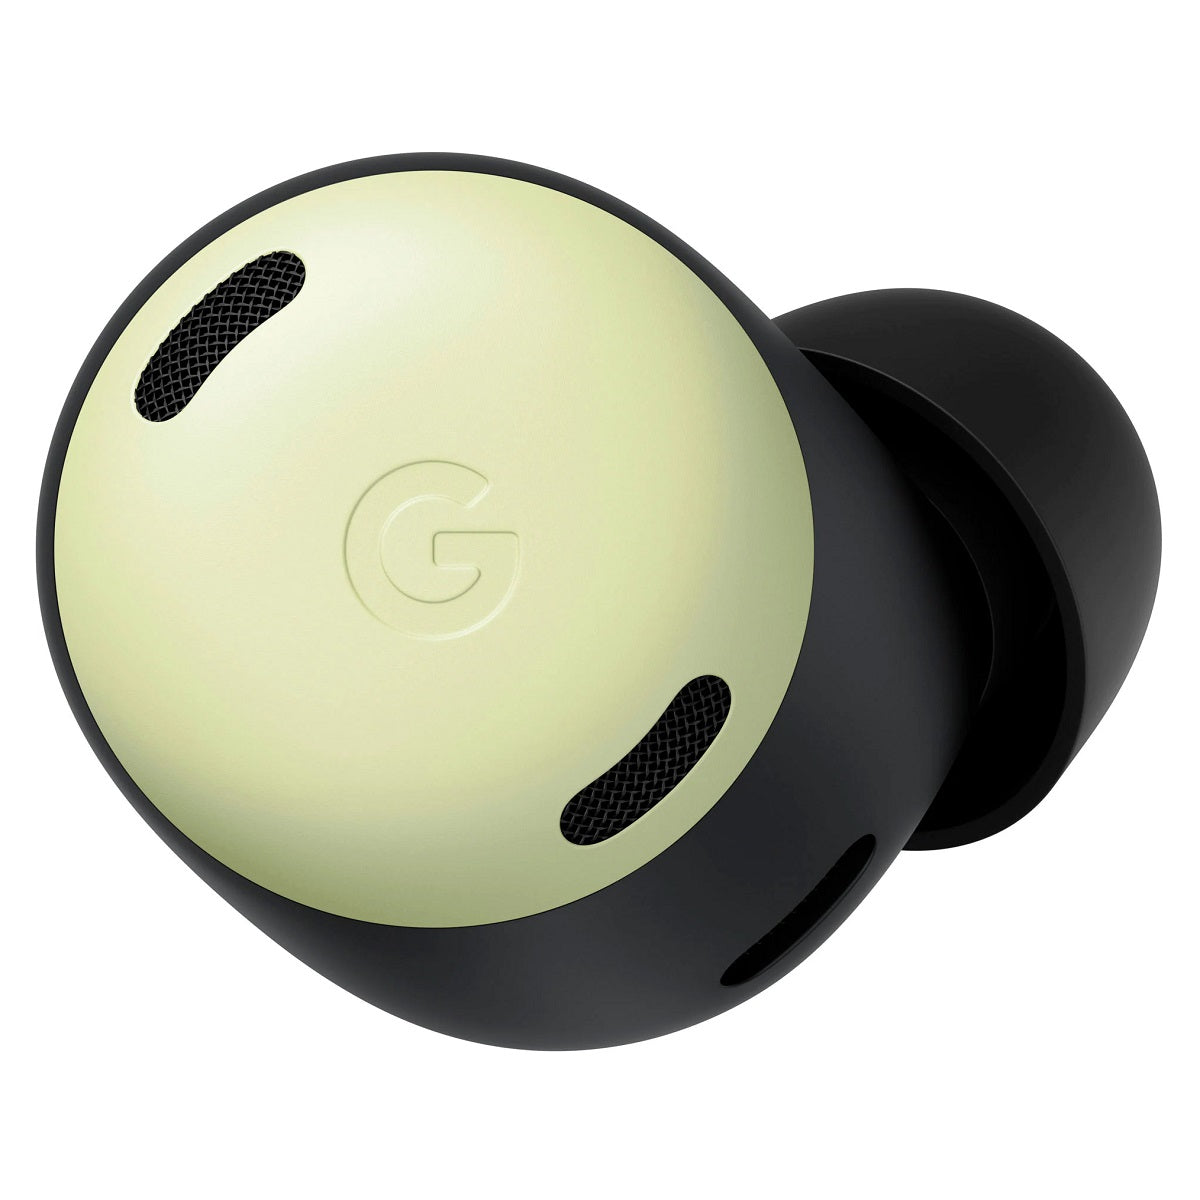 Google Pixel Buds Pro Noise Canceling Earbuds - Lemongrass Google